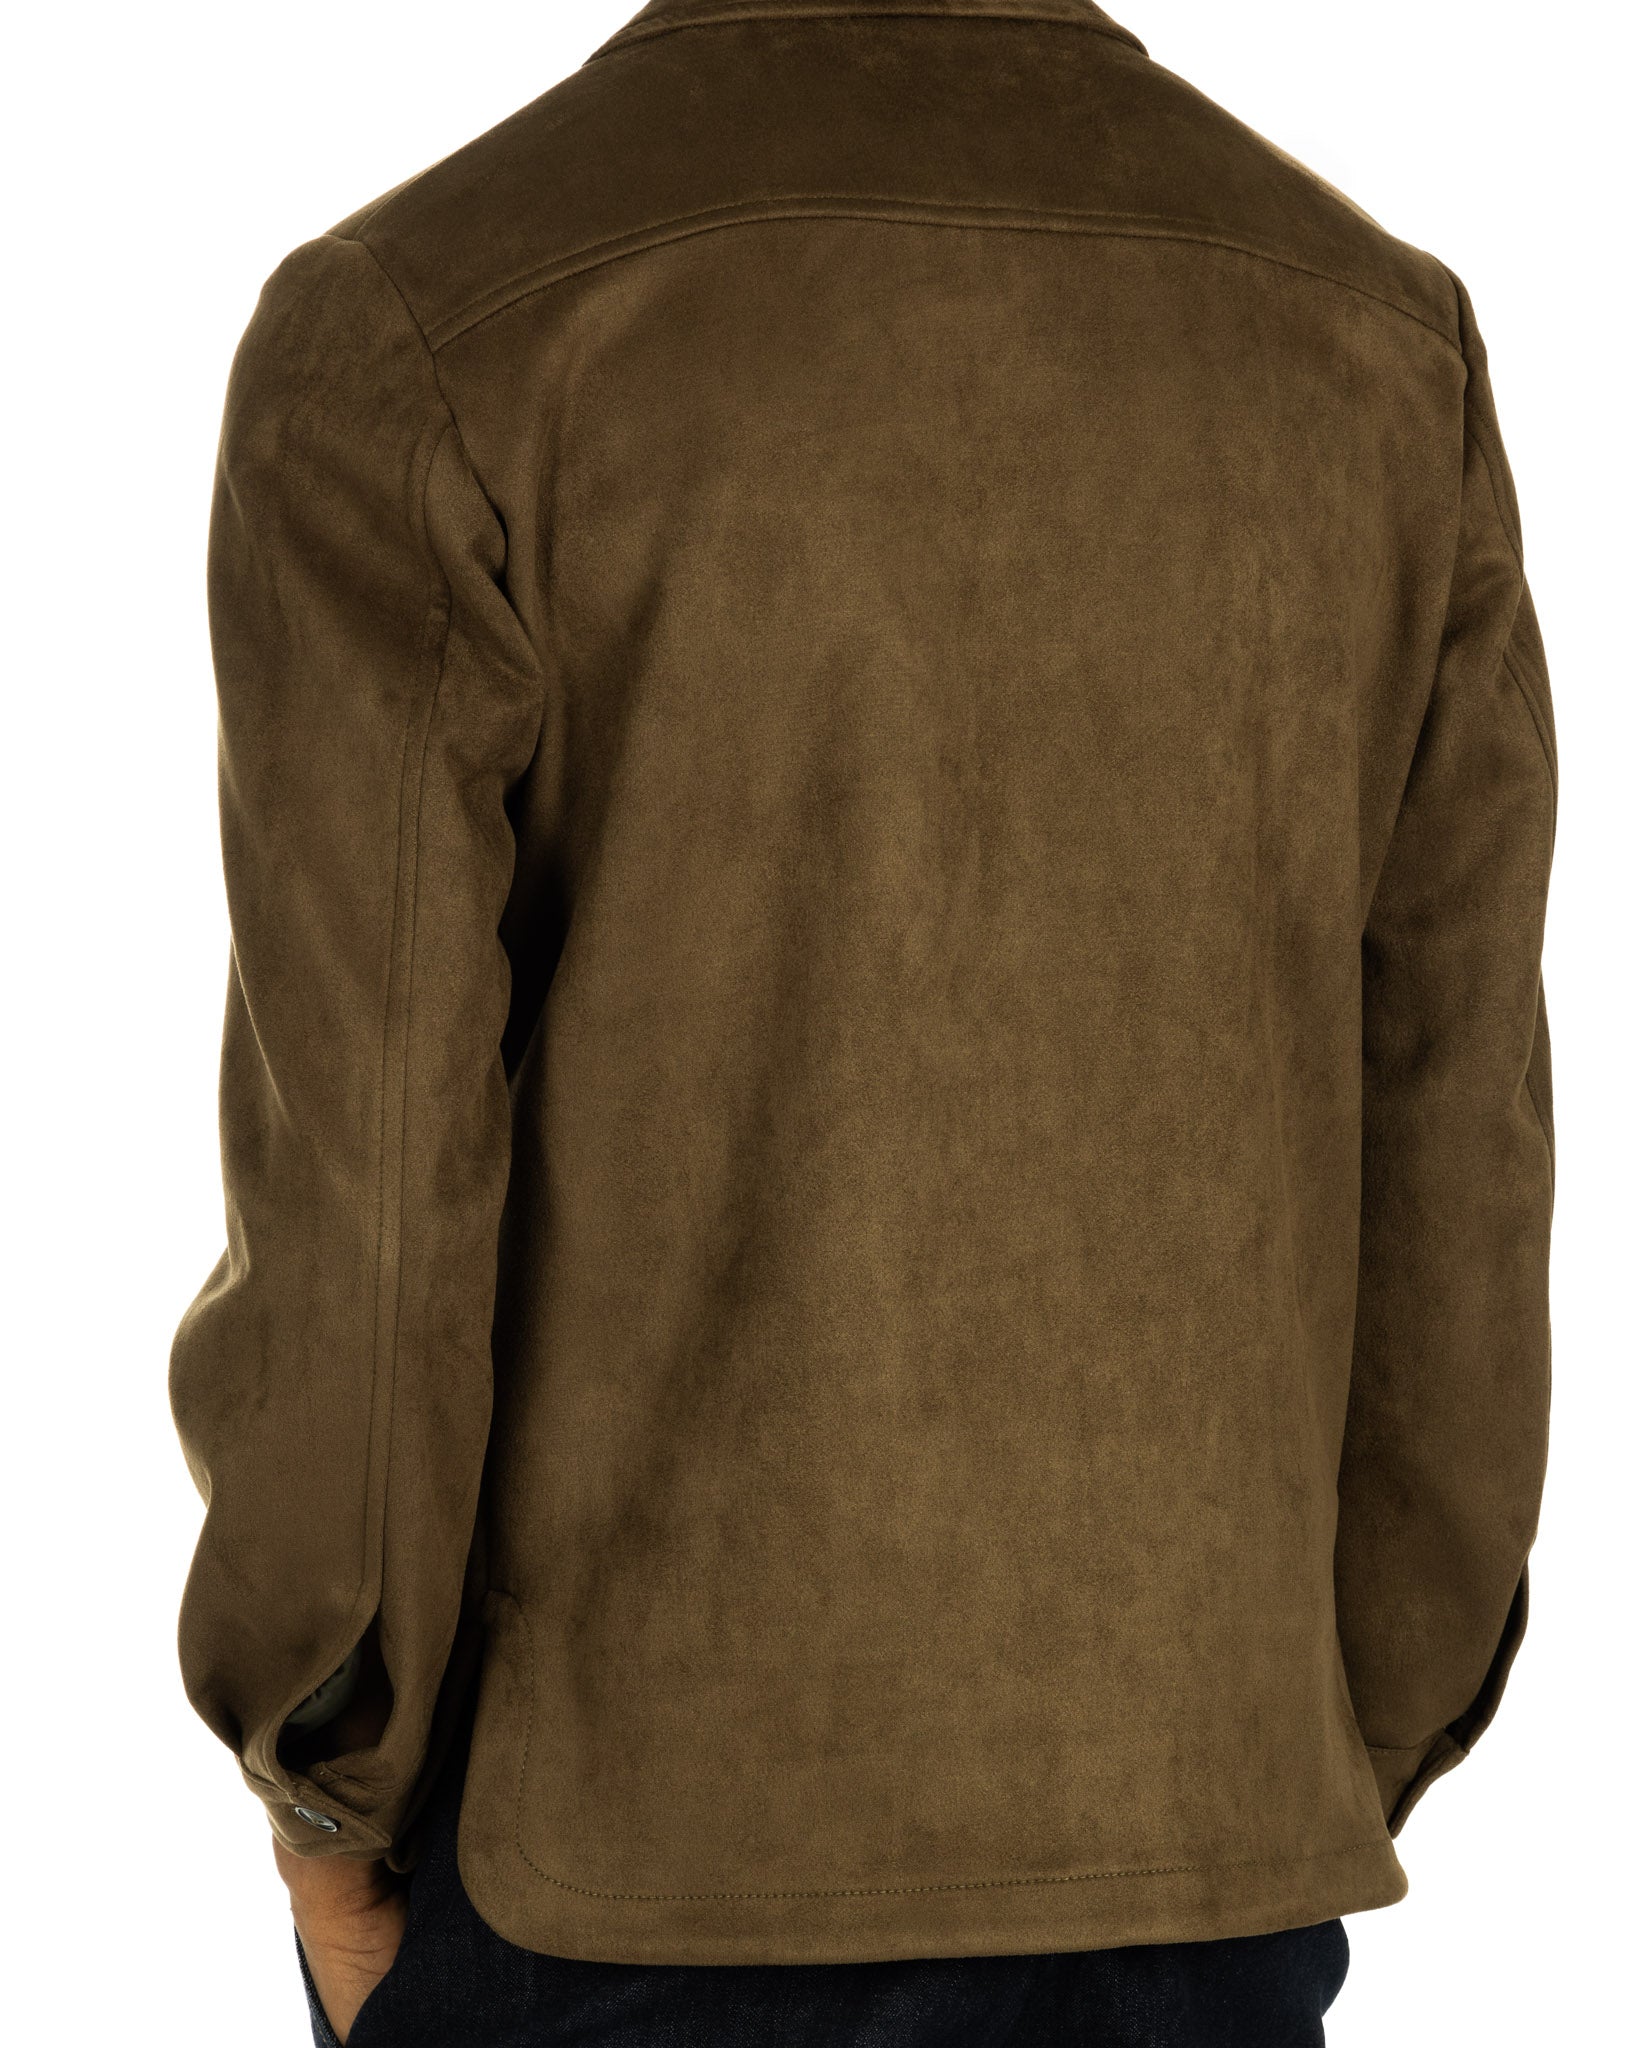 Meridion - suede military jacket